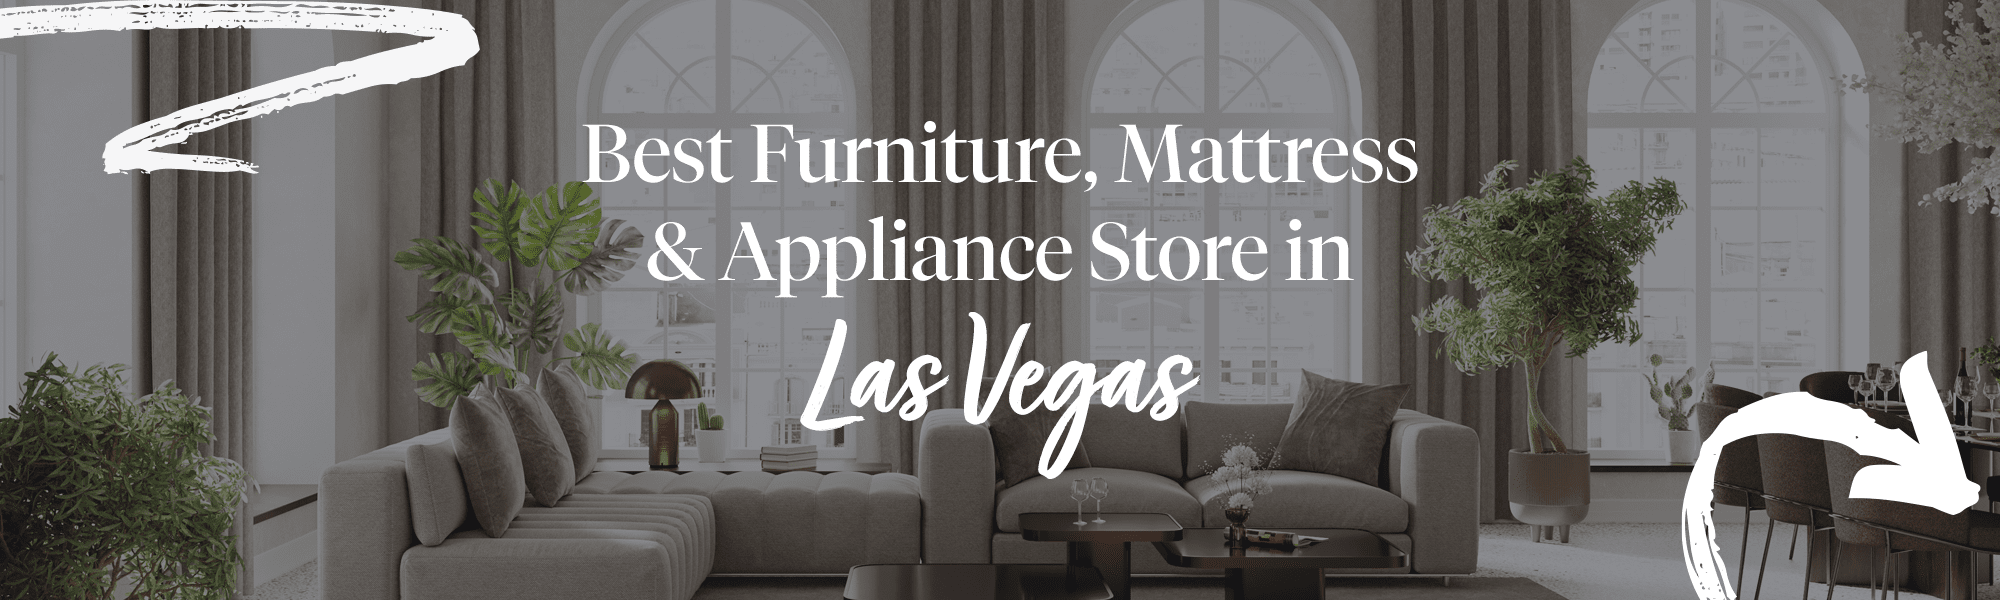 Best Furniture Store in Las Vegas, NV